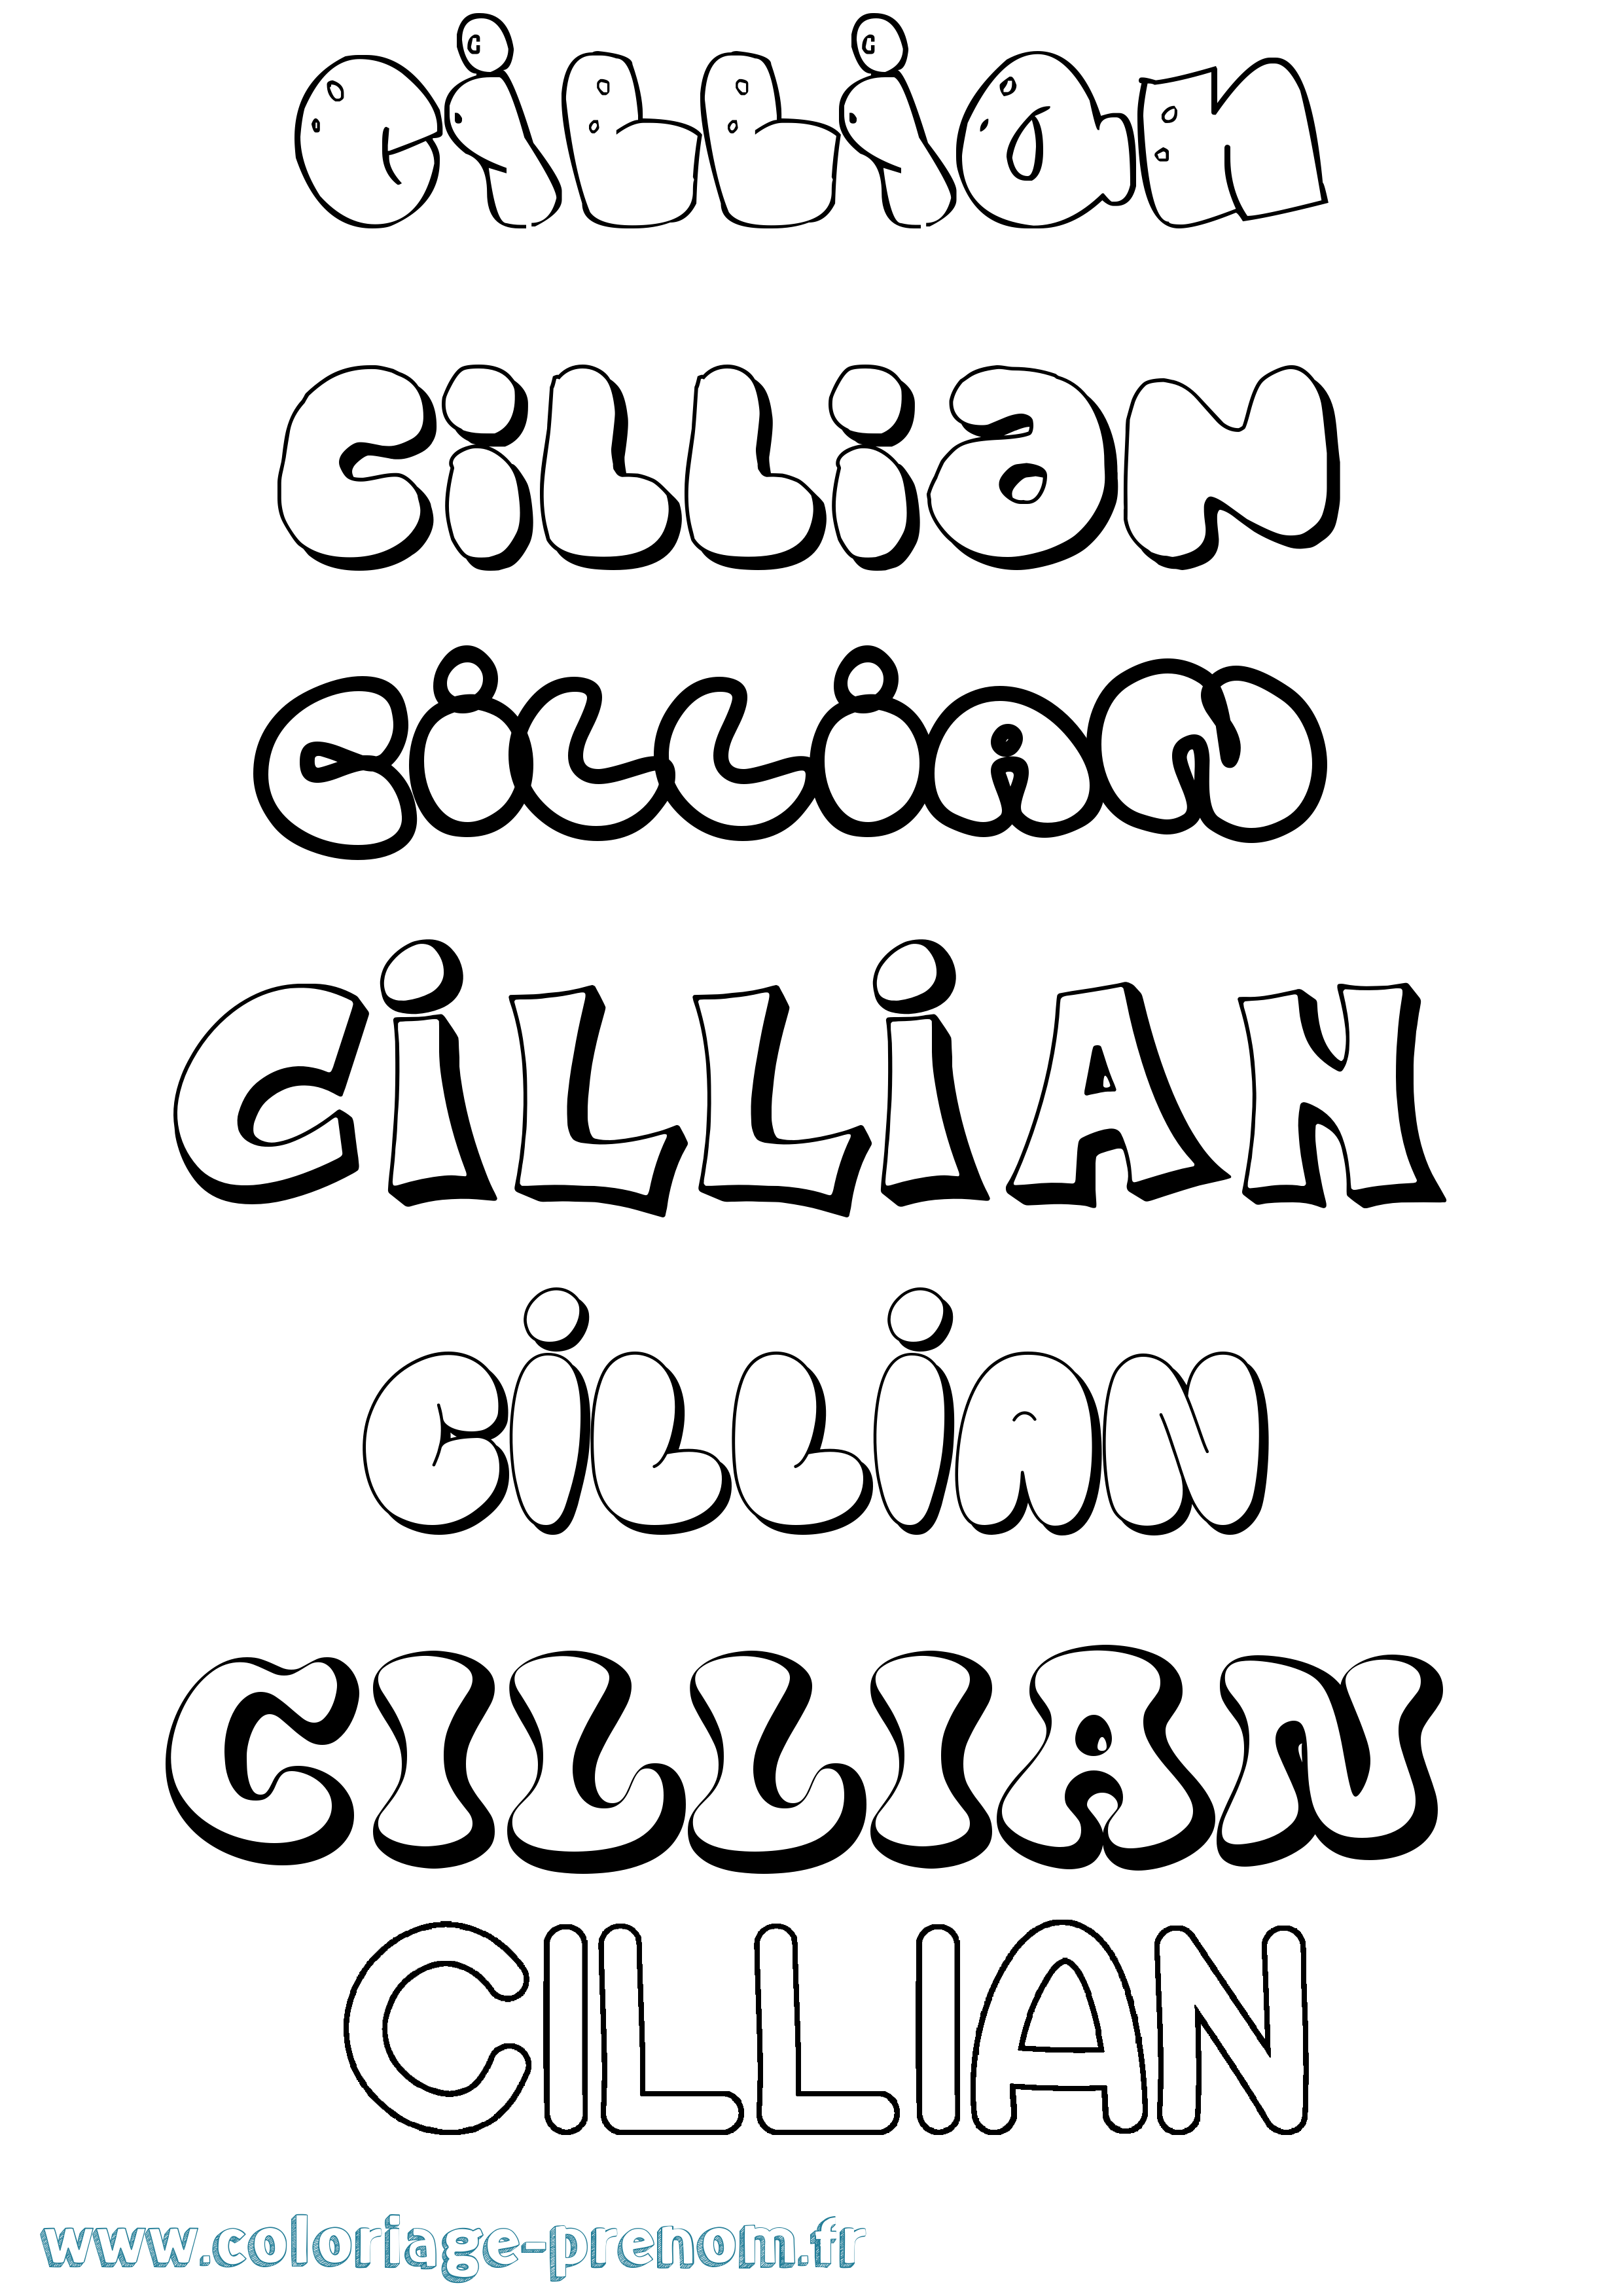 Coloriage prénom Cillian Bubble